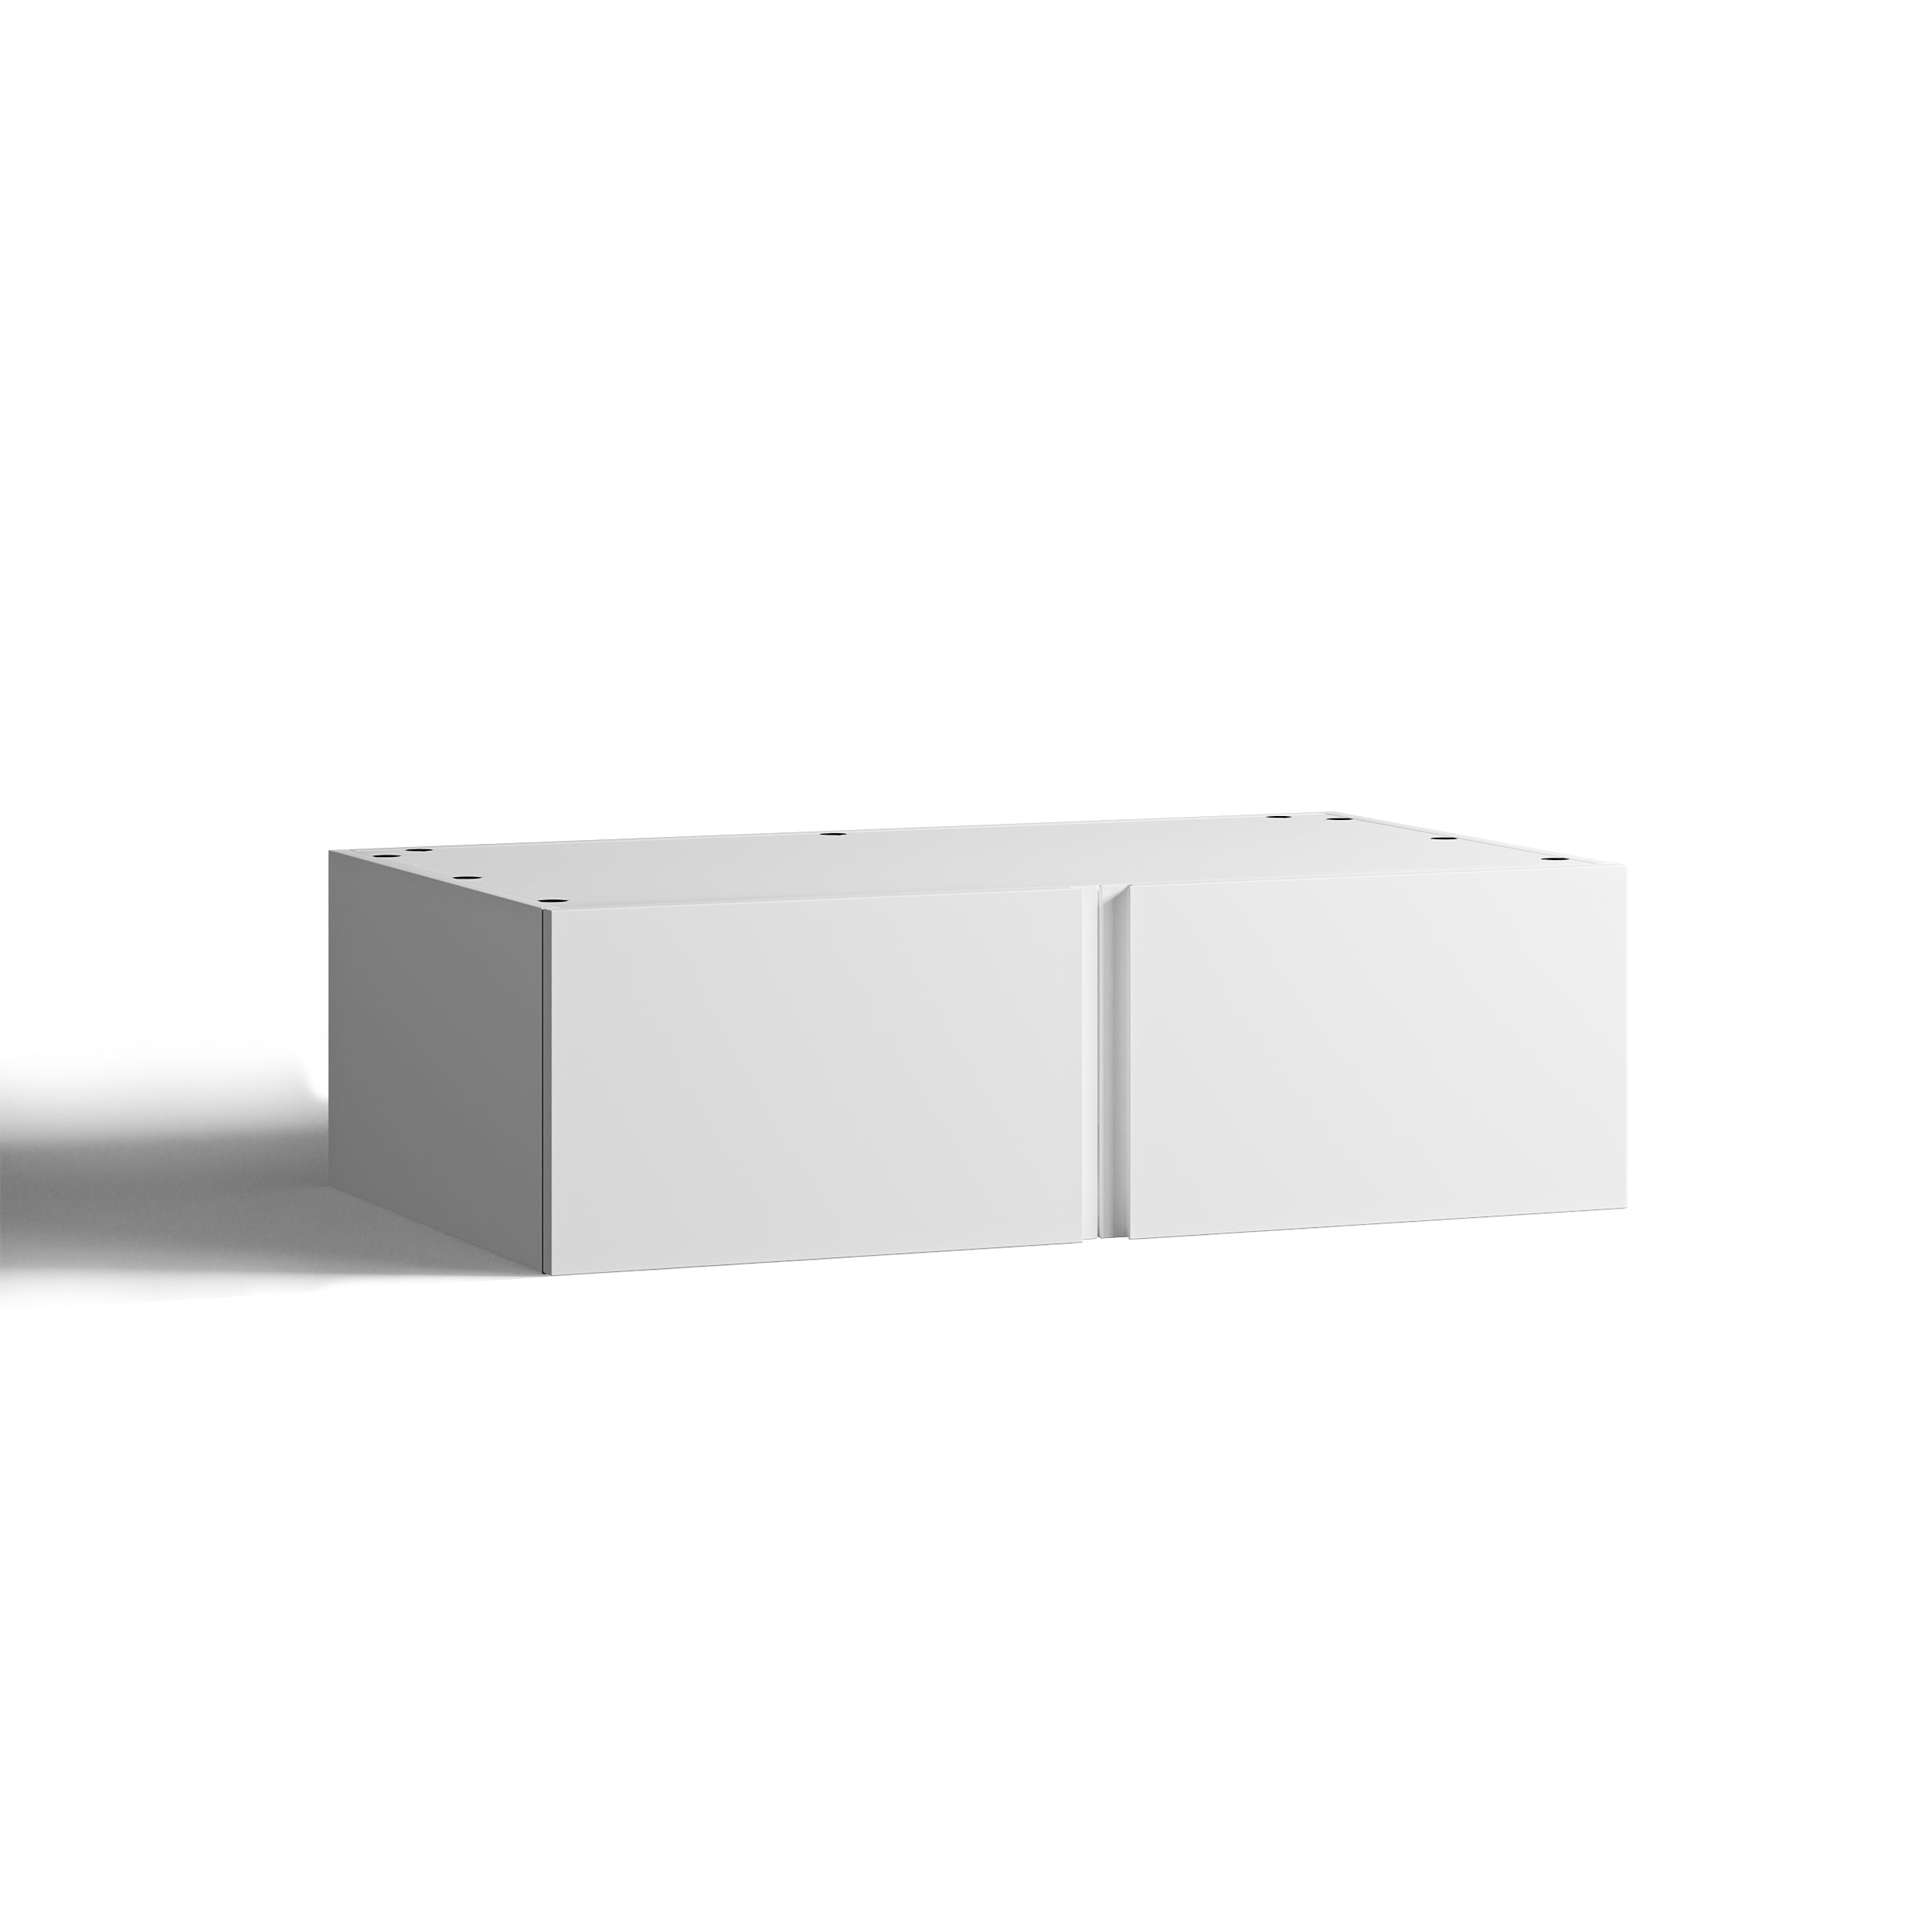 100x30 - Cabinet (58cm D) w 2 Doors - Finger Pull - PAX